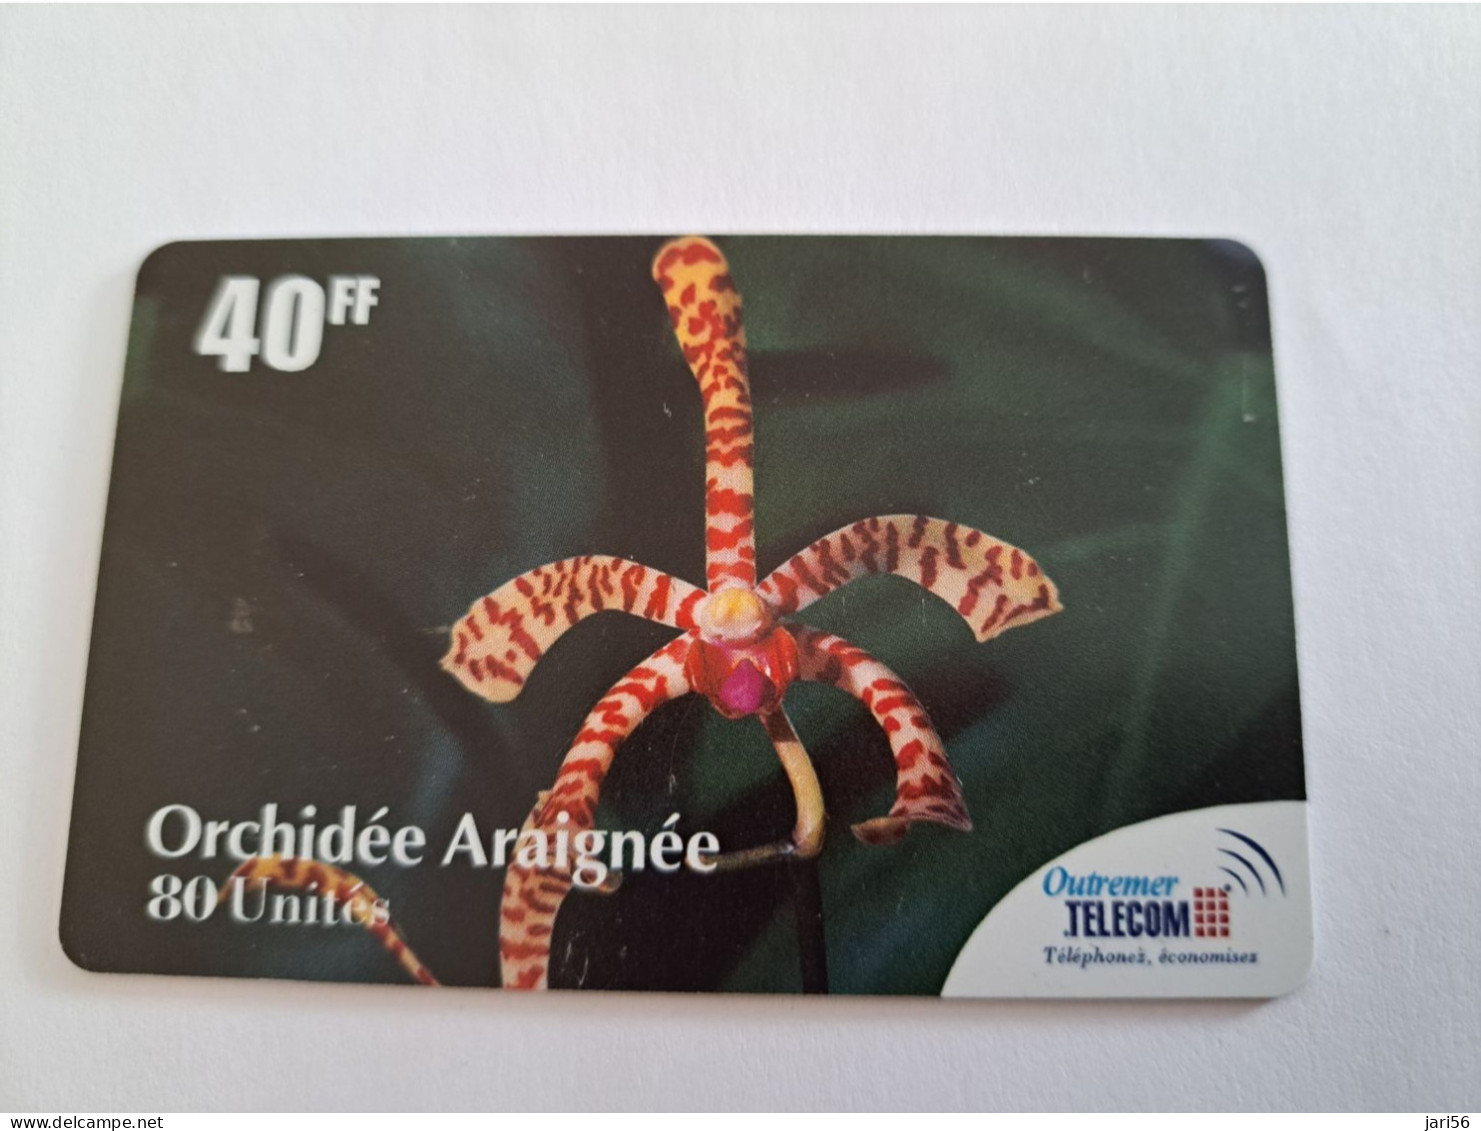 ST MARTIN  / OUTREMER/ FLOWERS/ ORCHIDEE ARAIGNEE   / 40 FF/ 80  UNITS / ANTF-OT51  FINE USED CARD    ** 13919 ** - Antillas (Francesas)